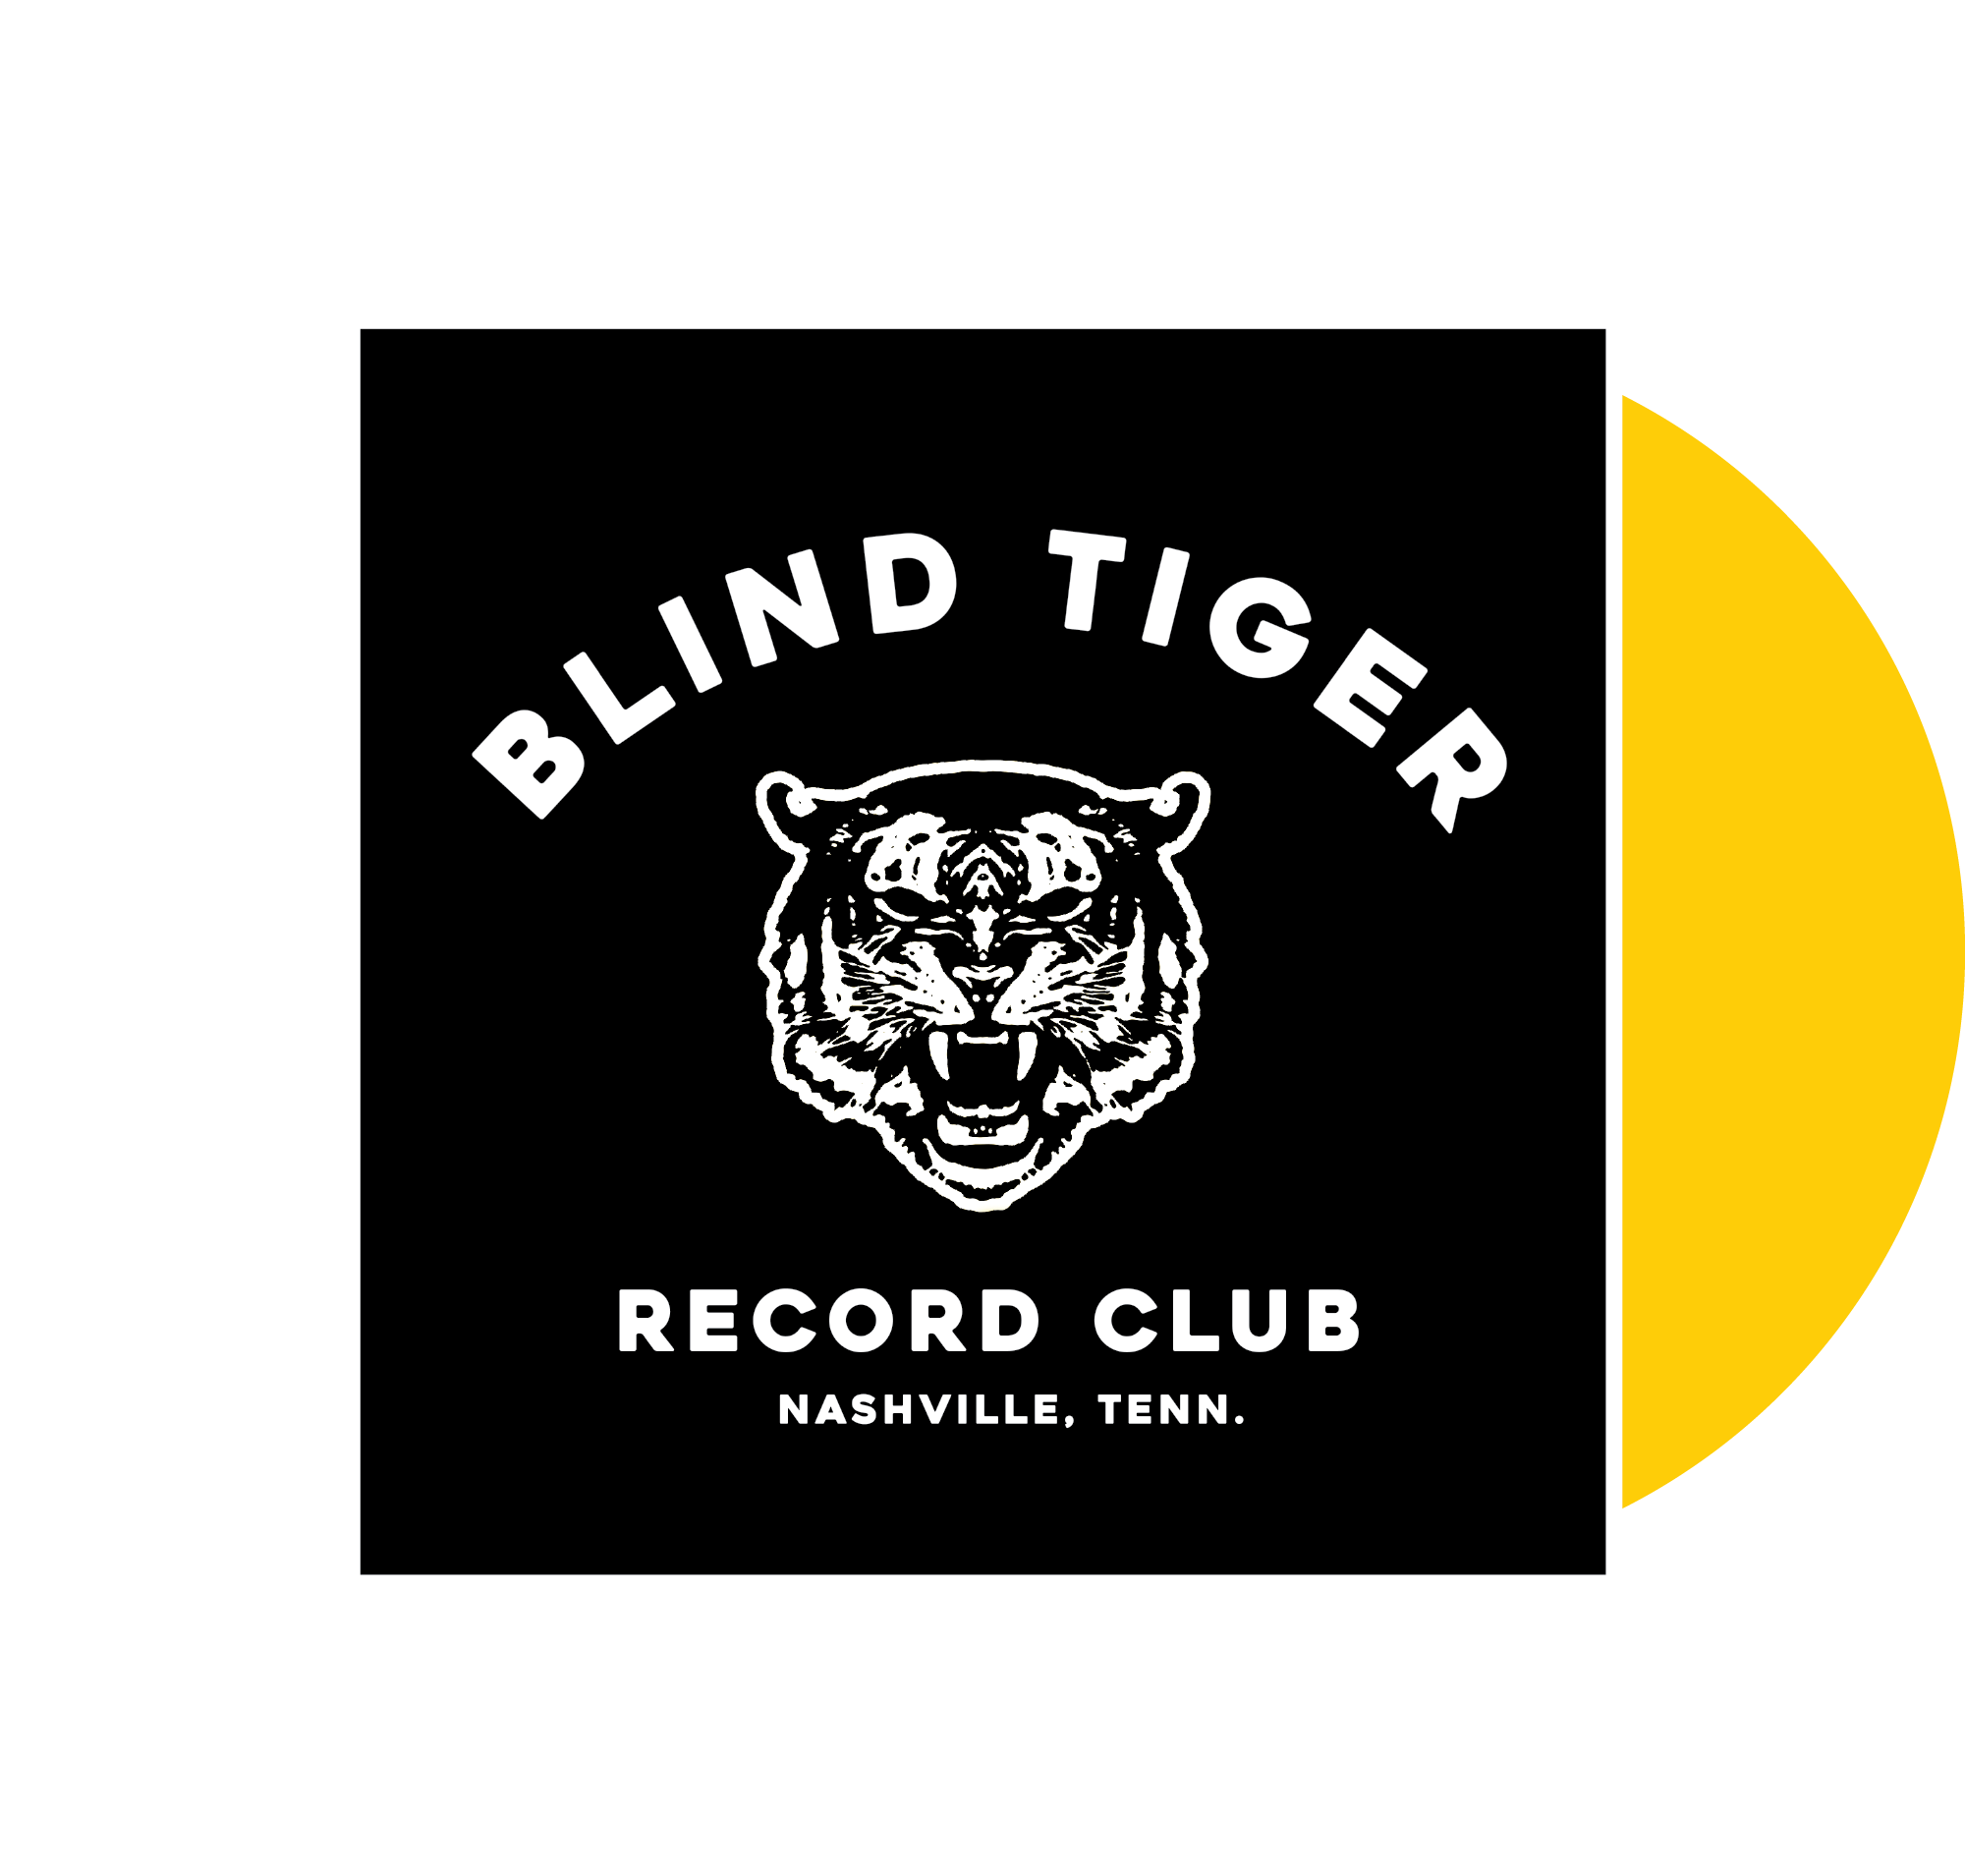 B.T.R.C. Vinyl Subscription - Blind Tiger Record Club